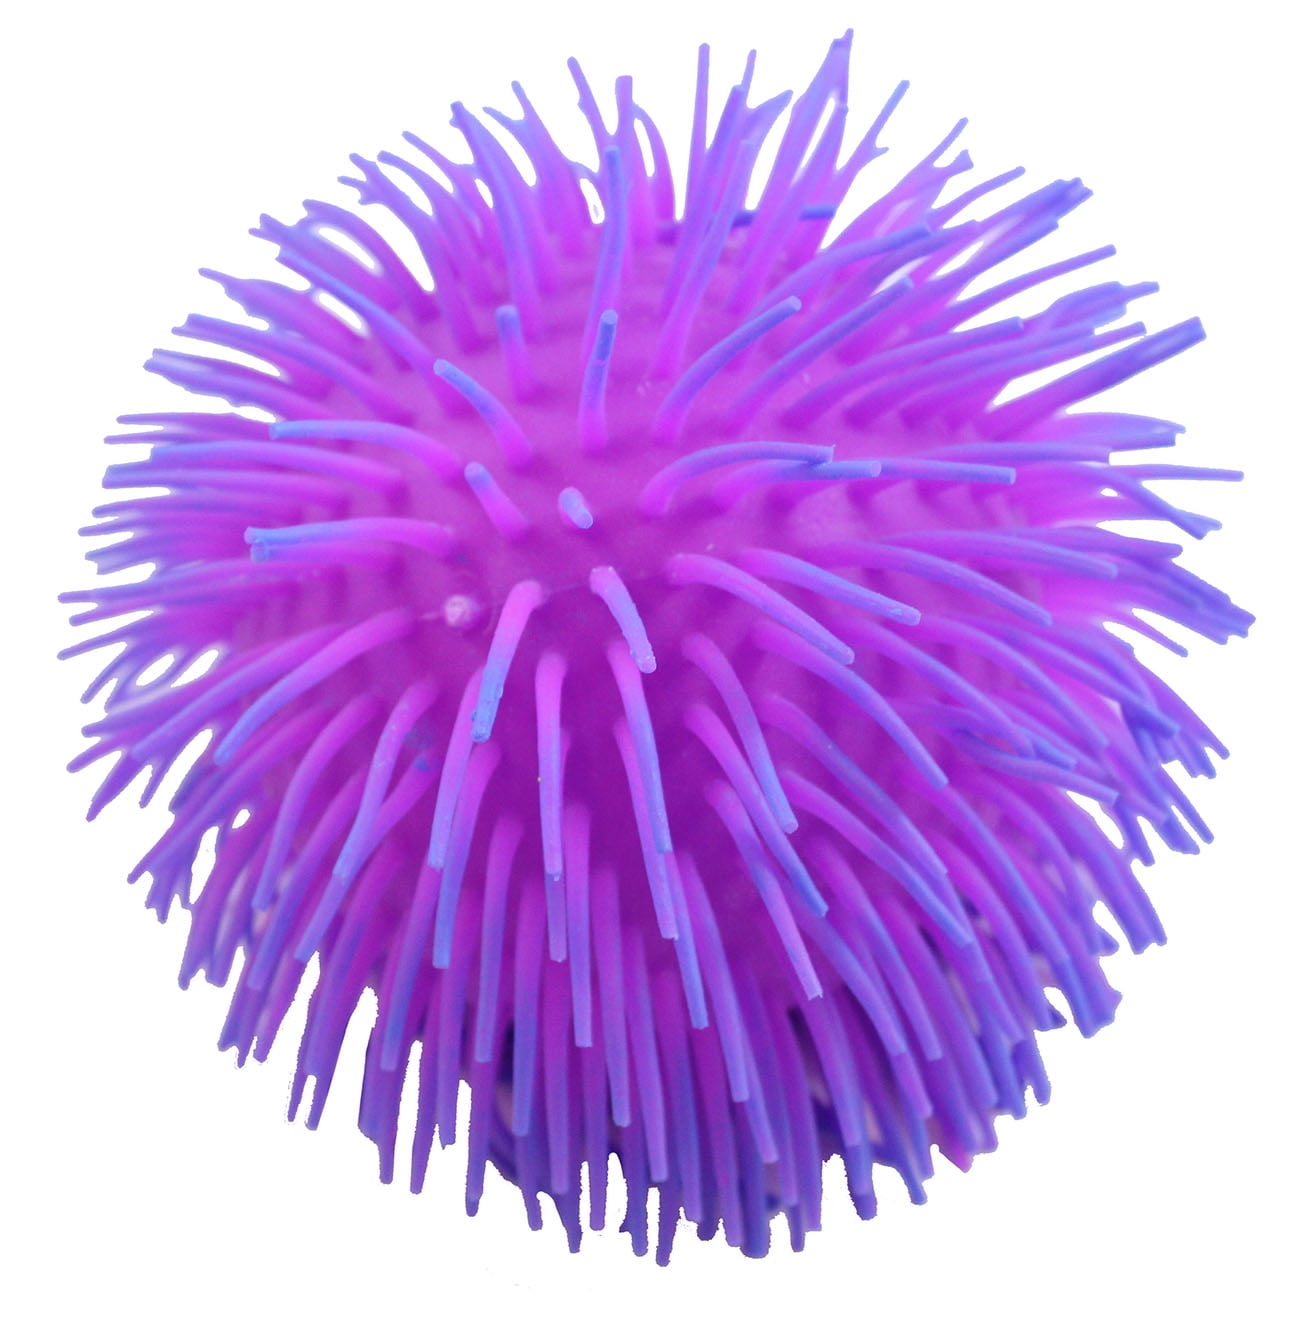 PURPLE) Giant Knobby Puffer Worm - Sensory Fidget and Stress Balls